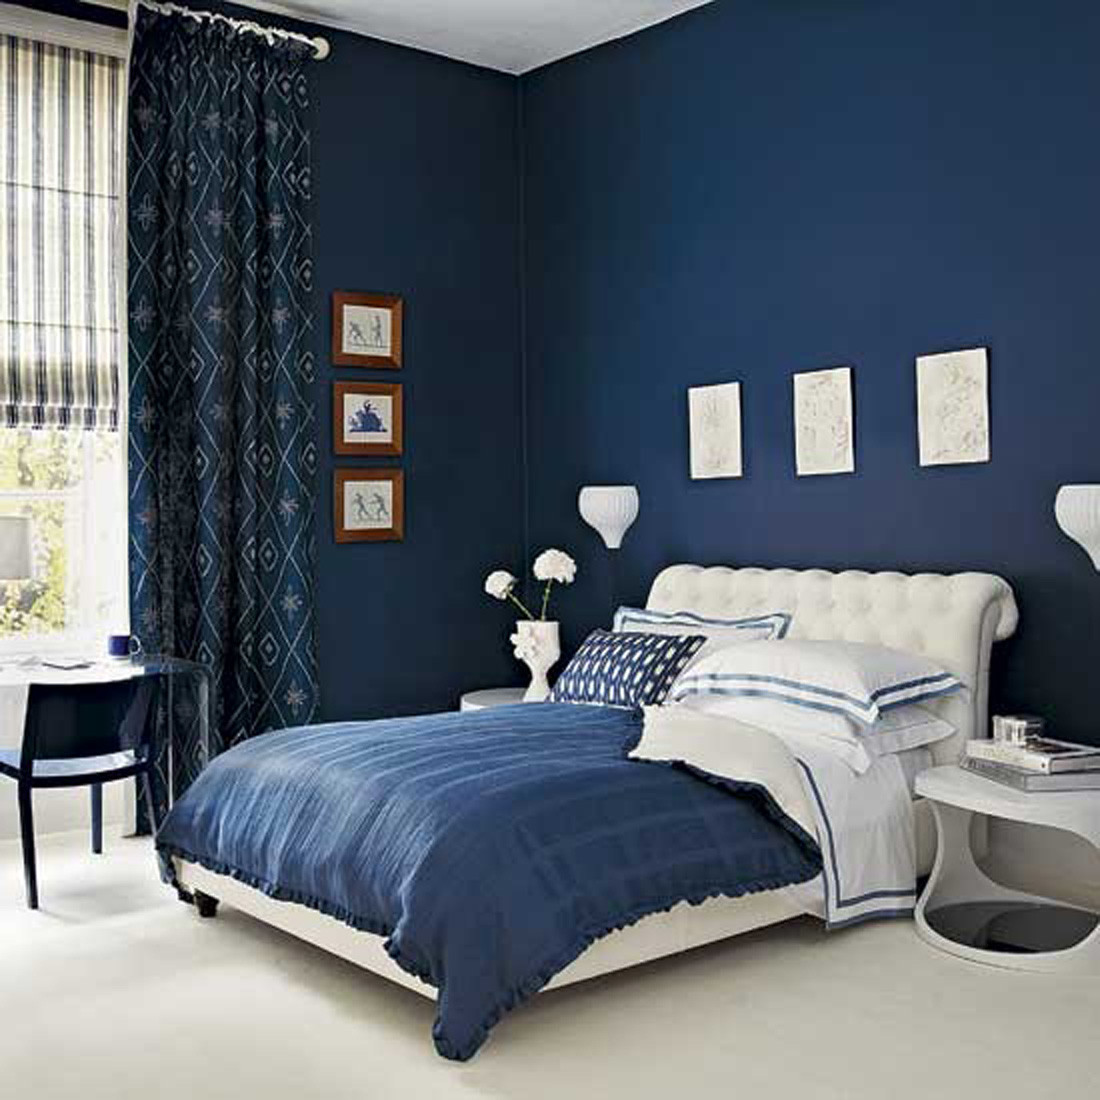 Dark Paint In Bedroom
 15 Beautiful Dark Blue Wall Design Ideas